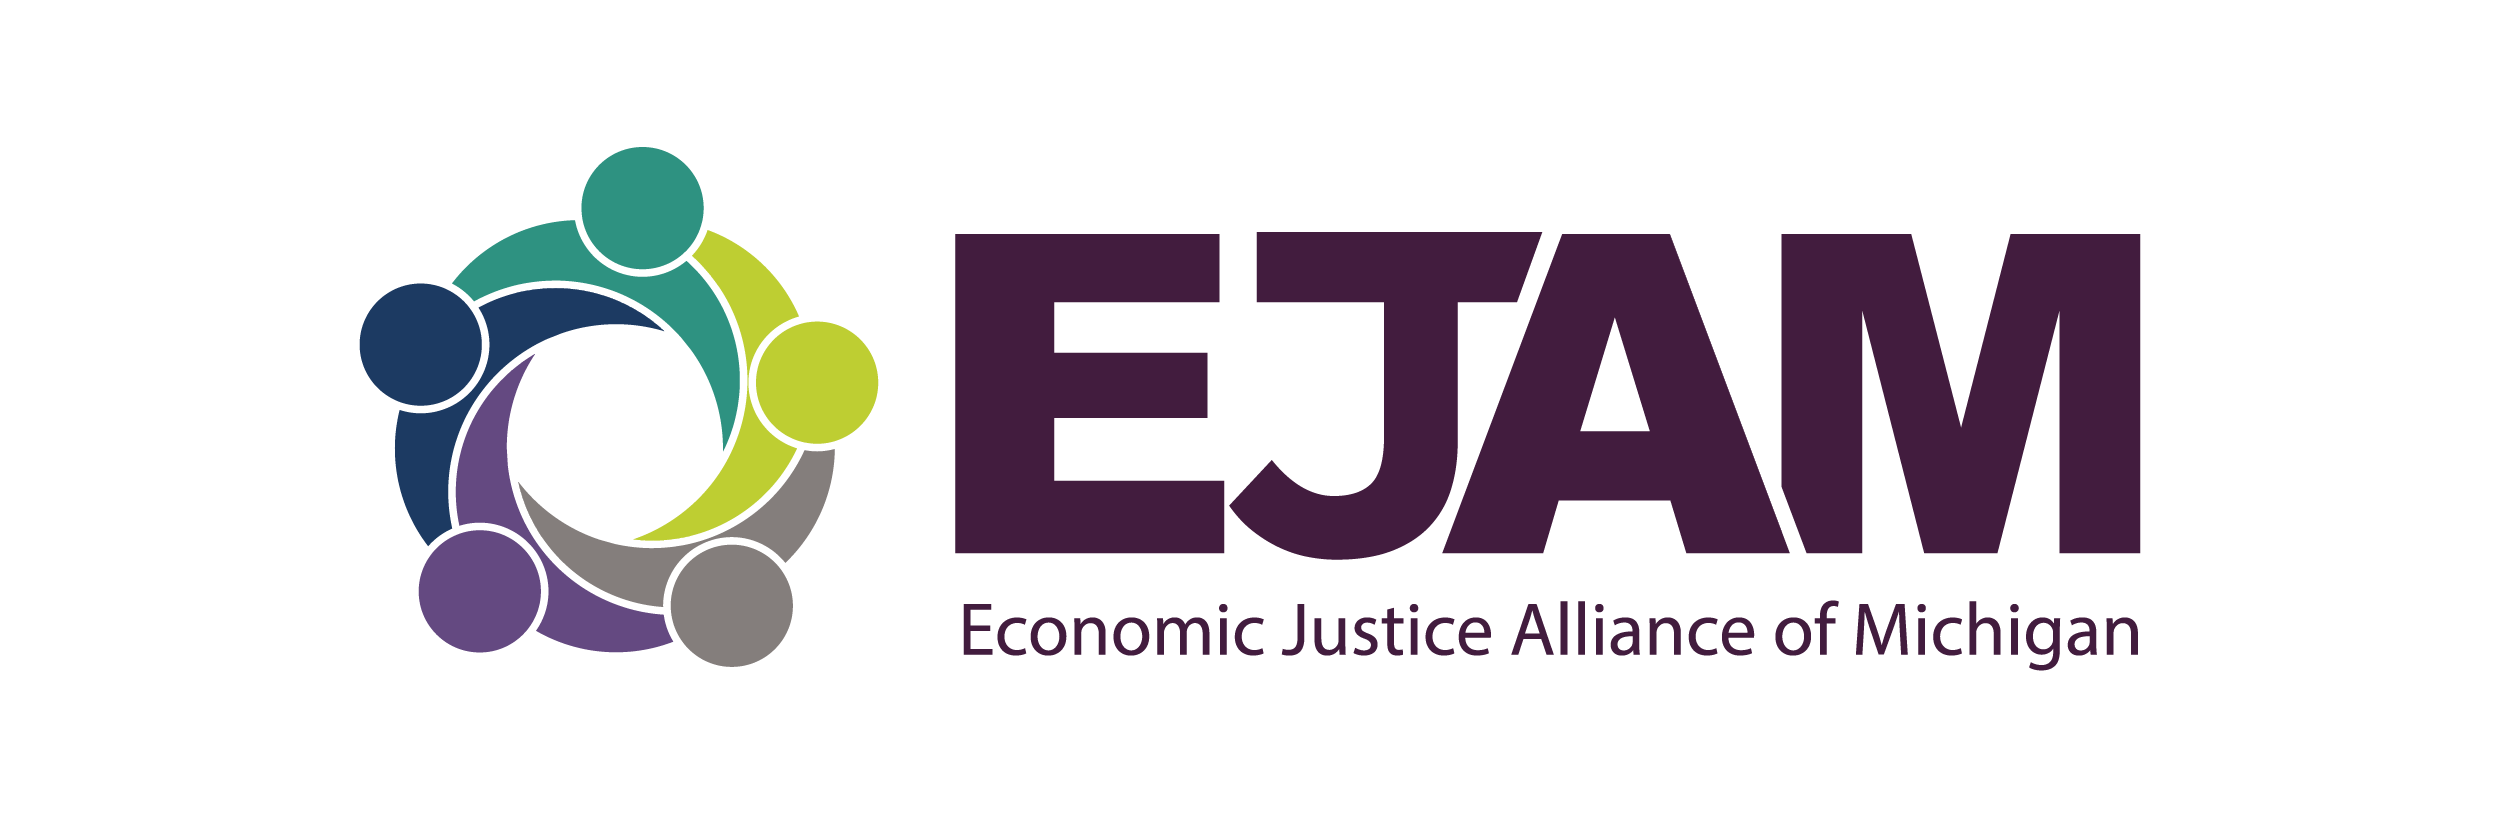 Economic Justice Alliance of Michigan logo